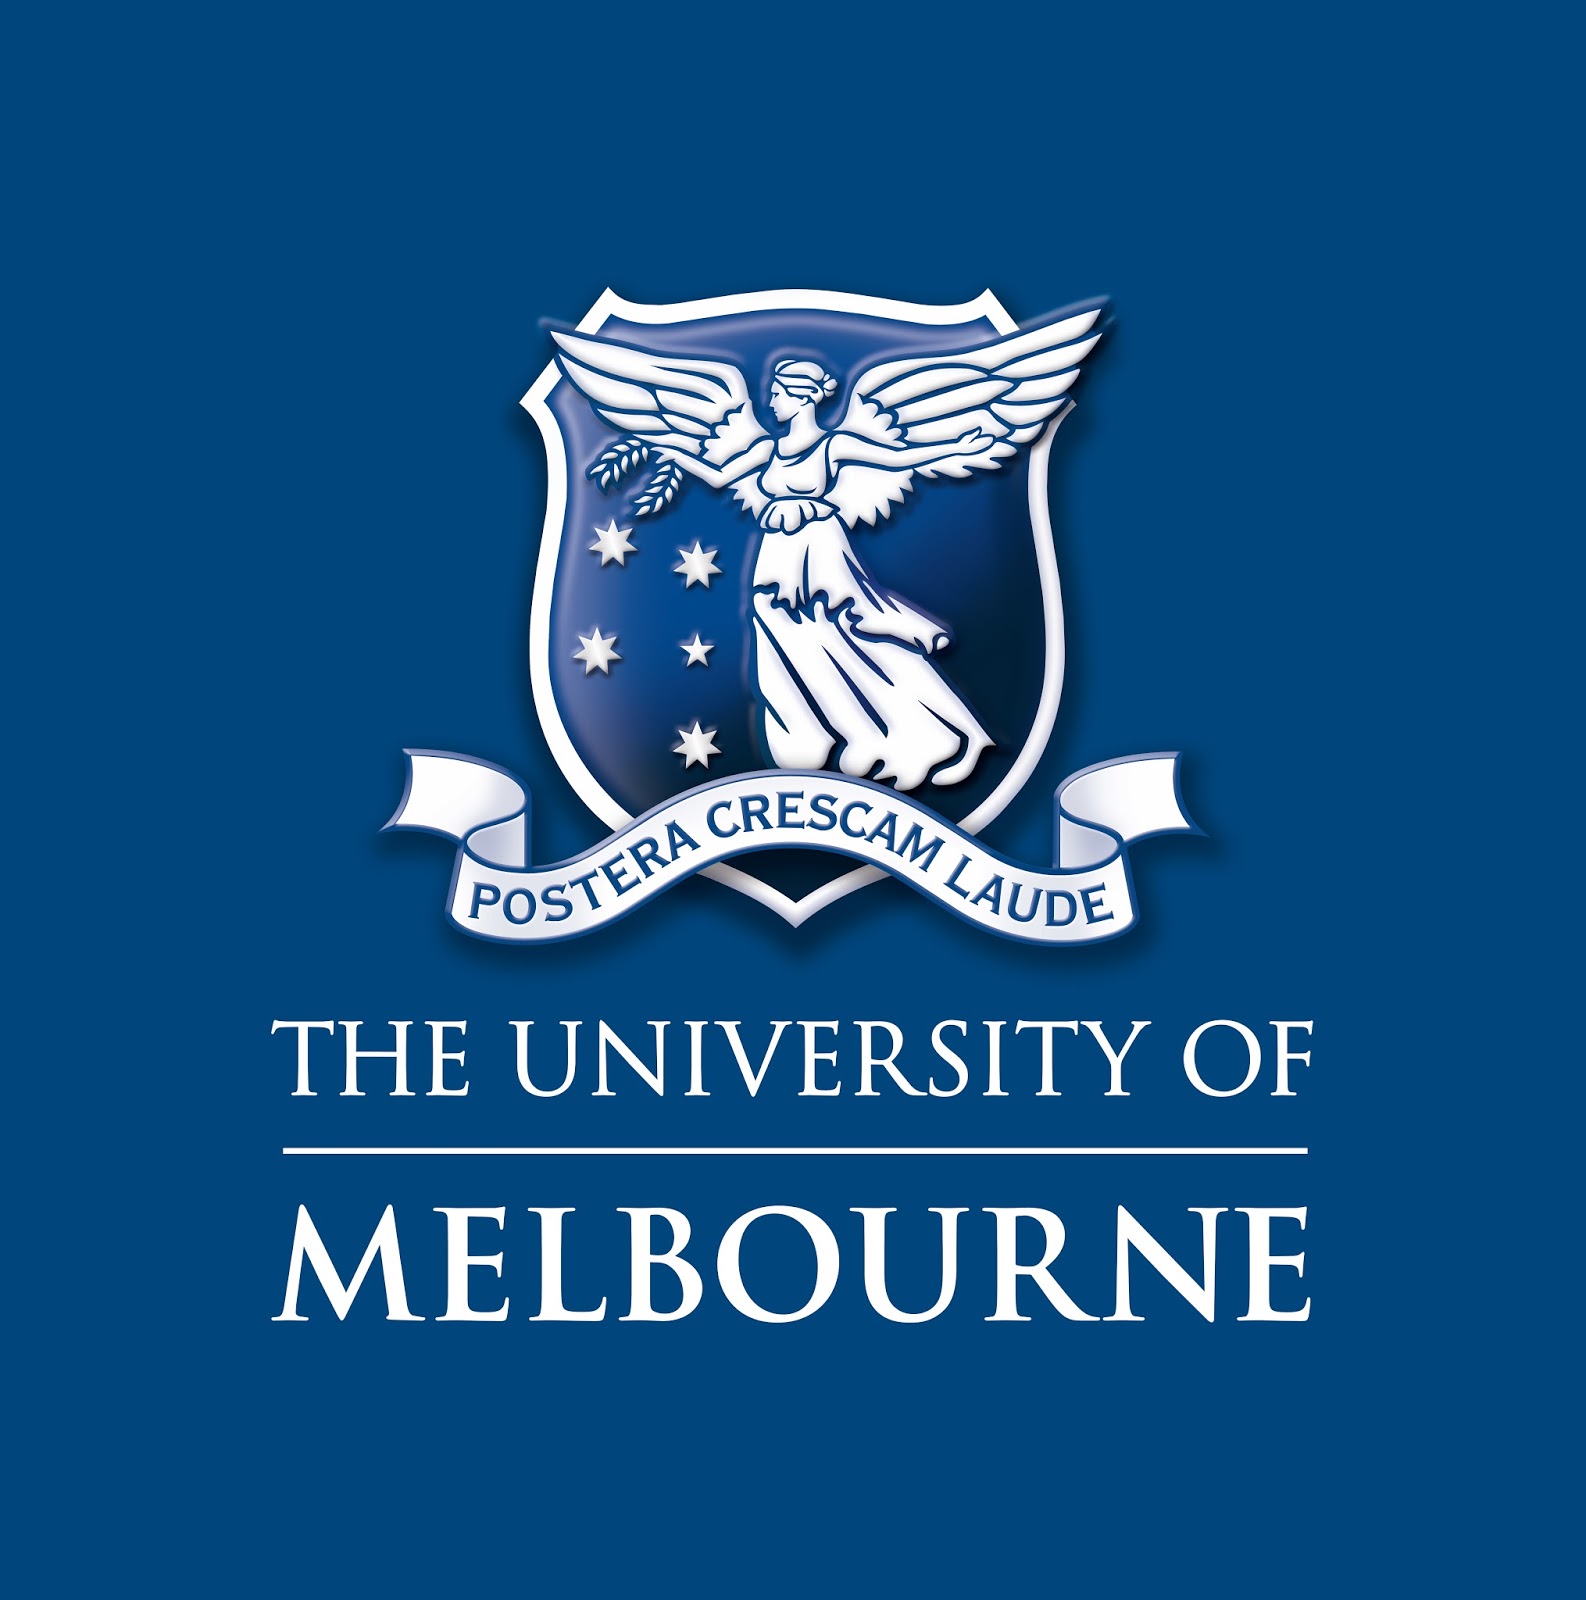 graduate research scholarship university of melbourne